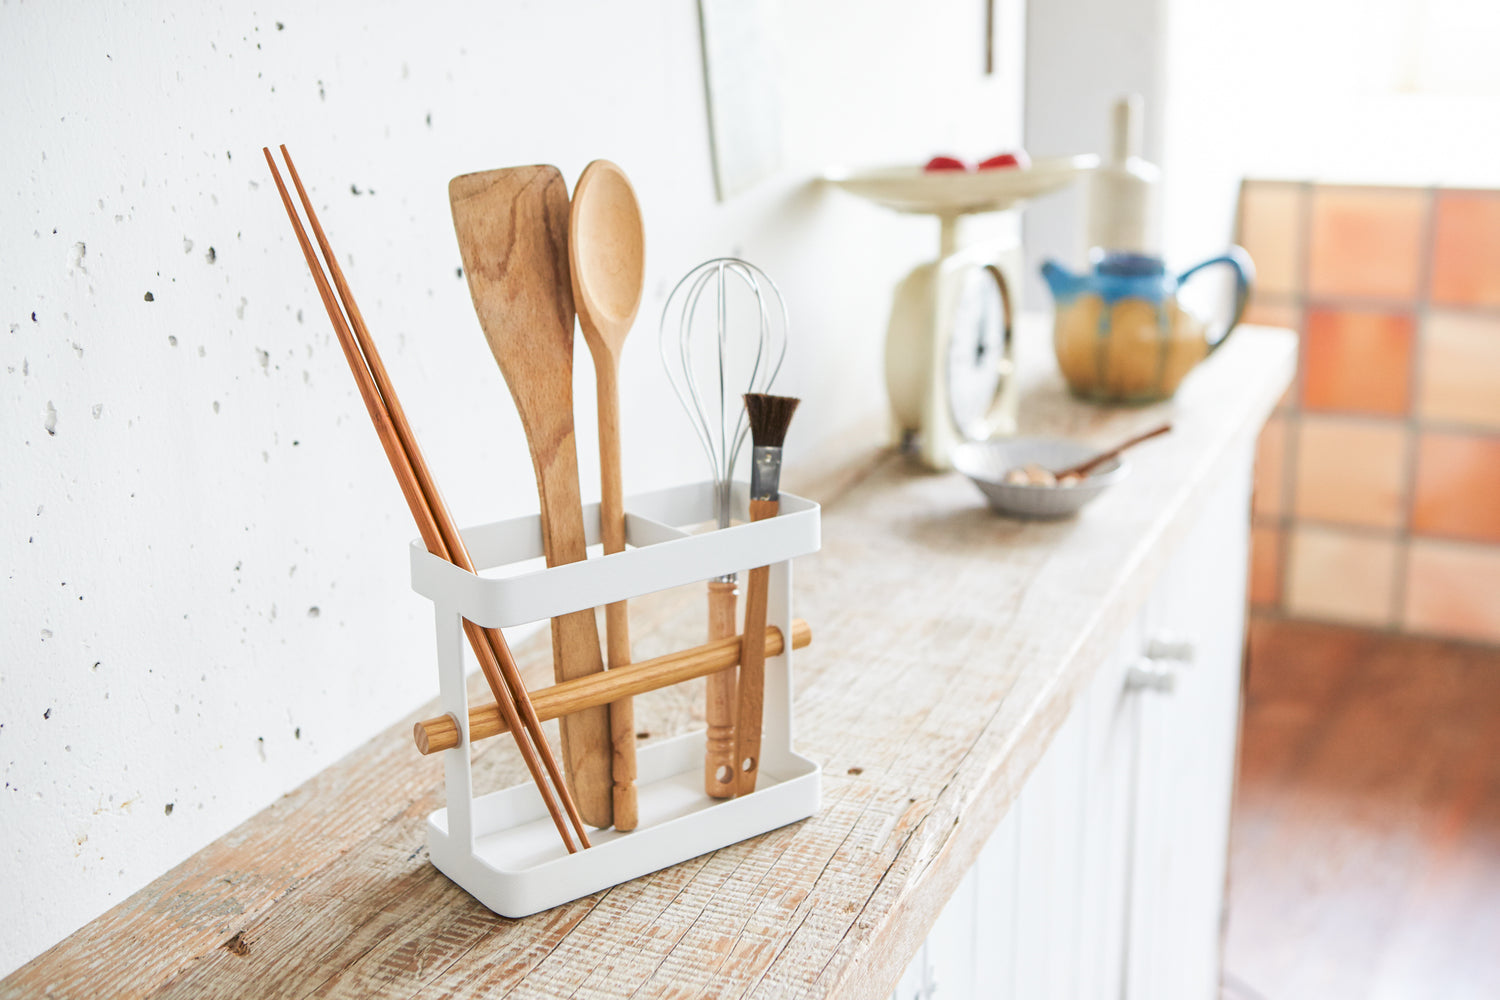 View 4 - Utensil holder holding kitchen utensils on shelf by Yamazaki Home.